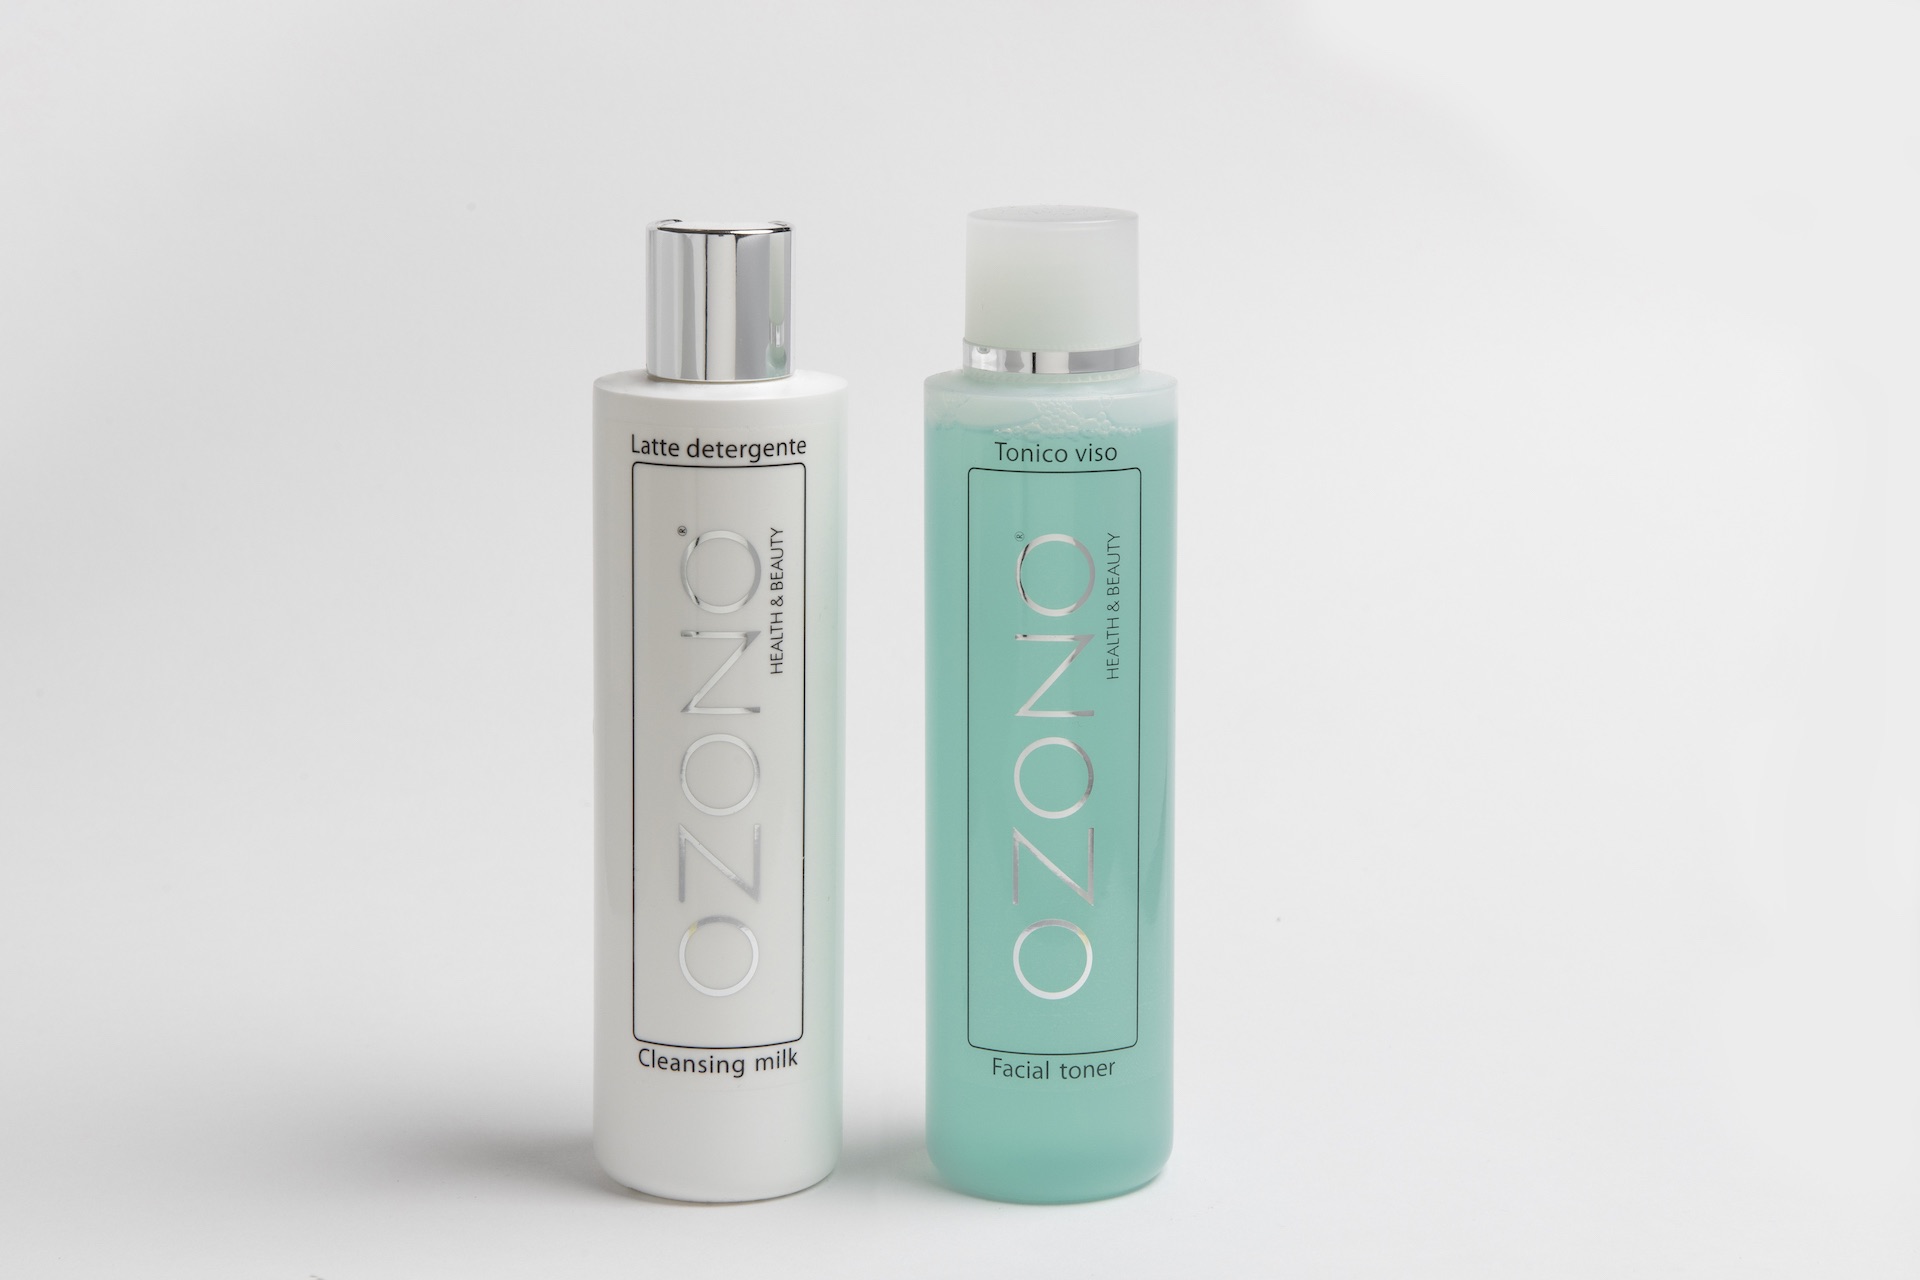 Latte detergente - Ozono Health & Beauty